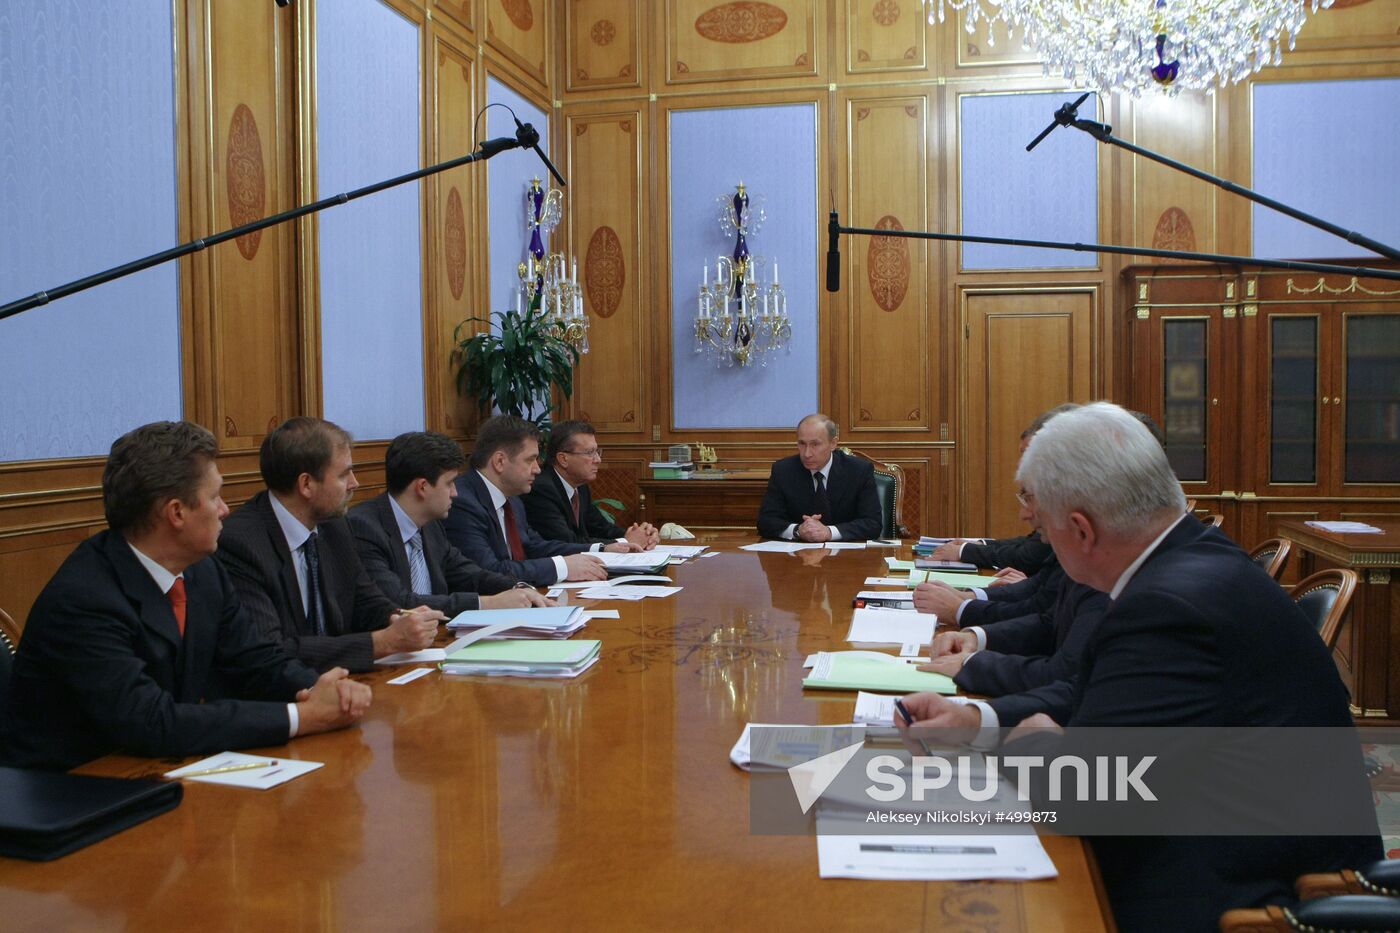 Vladimir Putin chairs meeting on processing associated gas